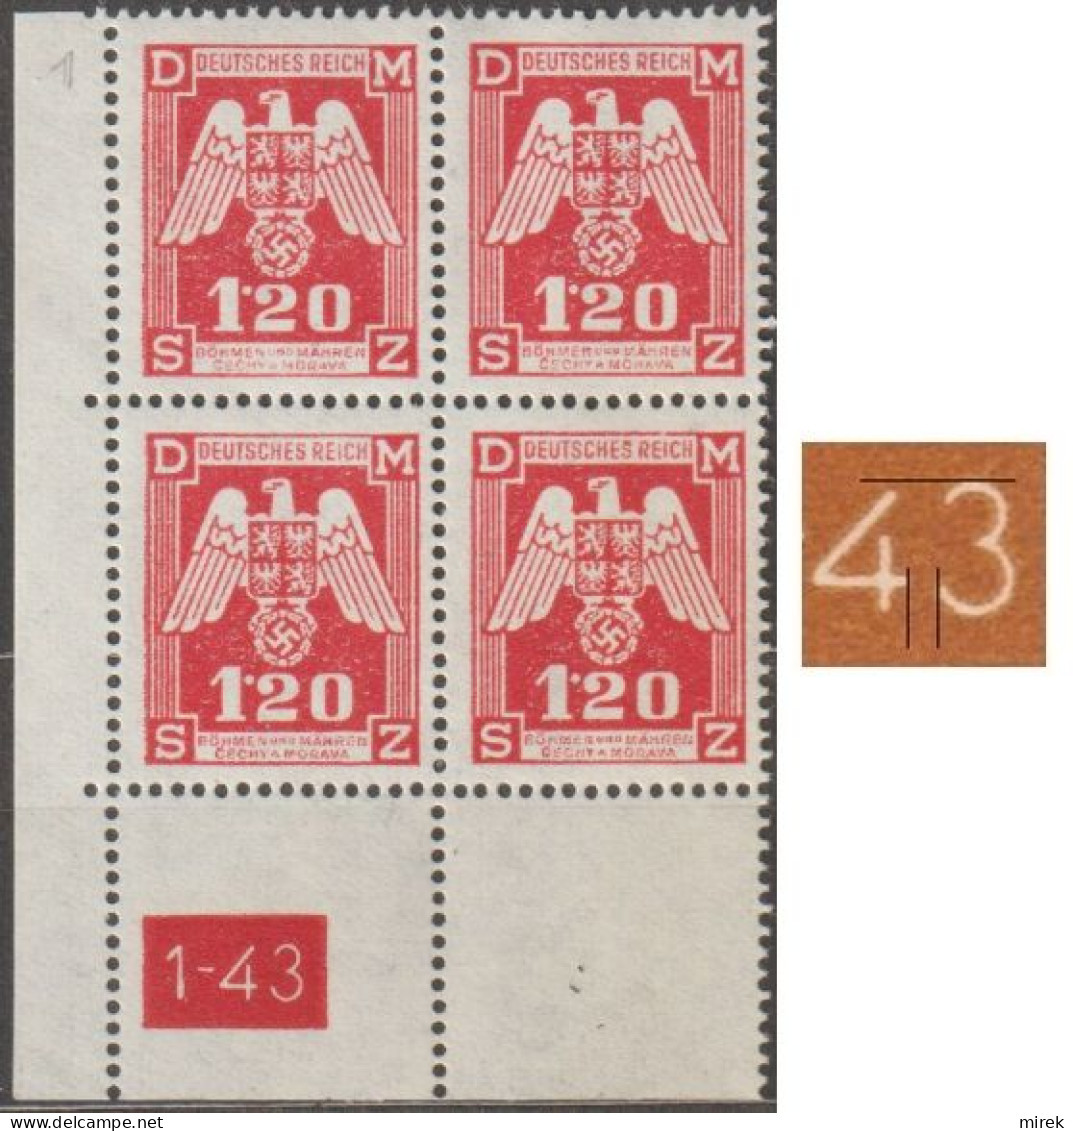 053/ Pof. SL 19, Corner Stamps, Plate Number 1-43, Type 2, Var. 1 - Ungebraucht